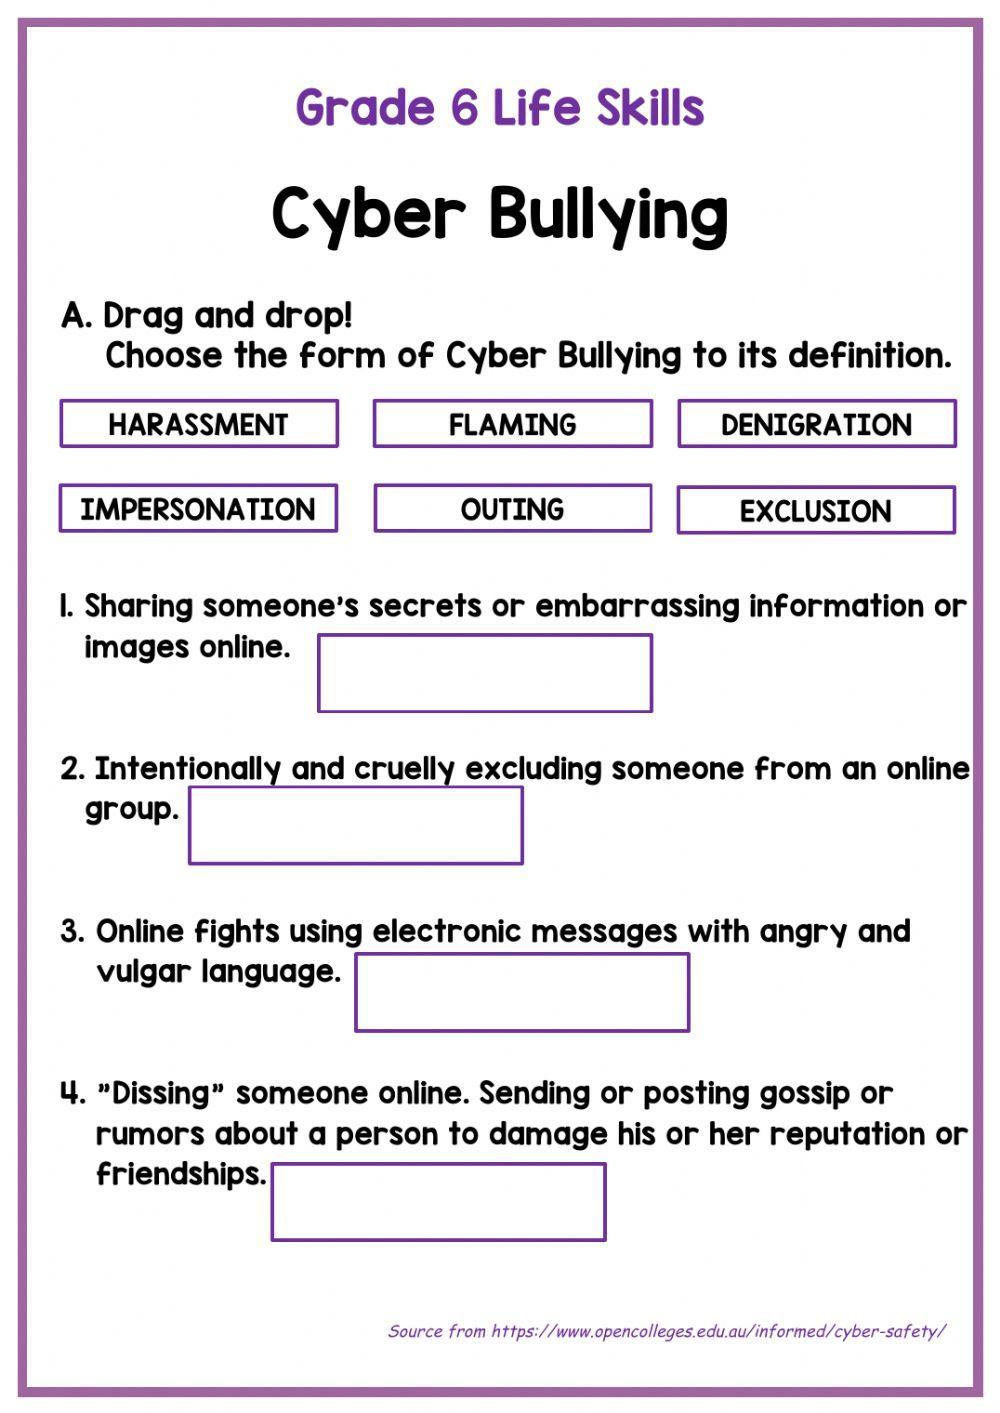 Lifeskills - Cyber Bullying